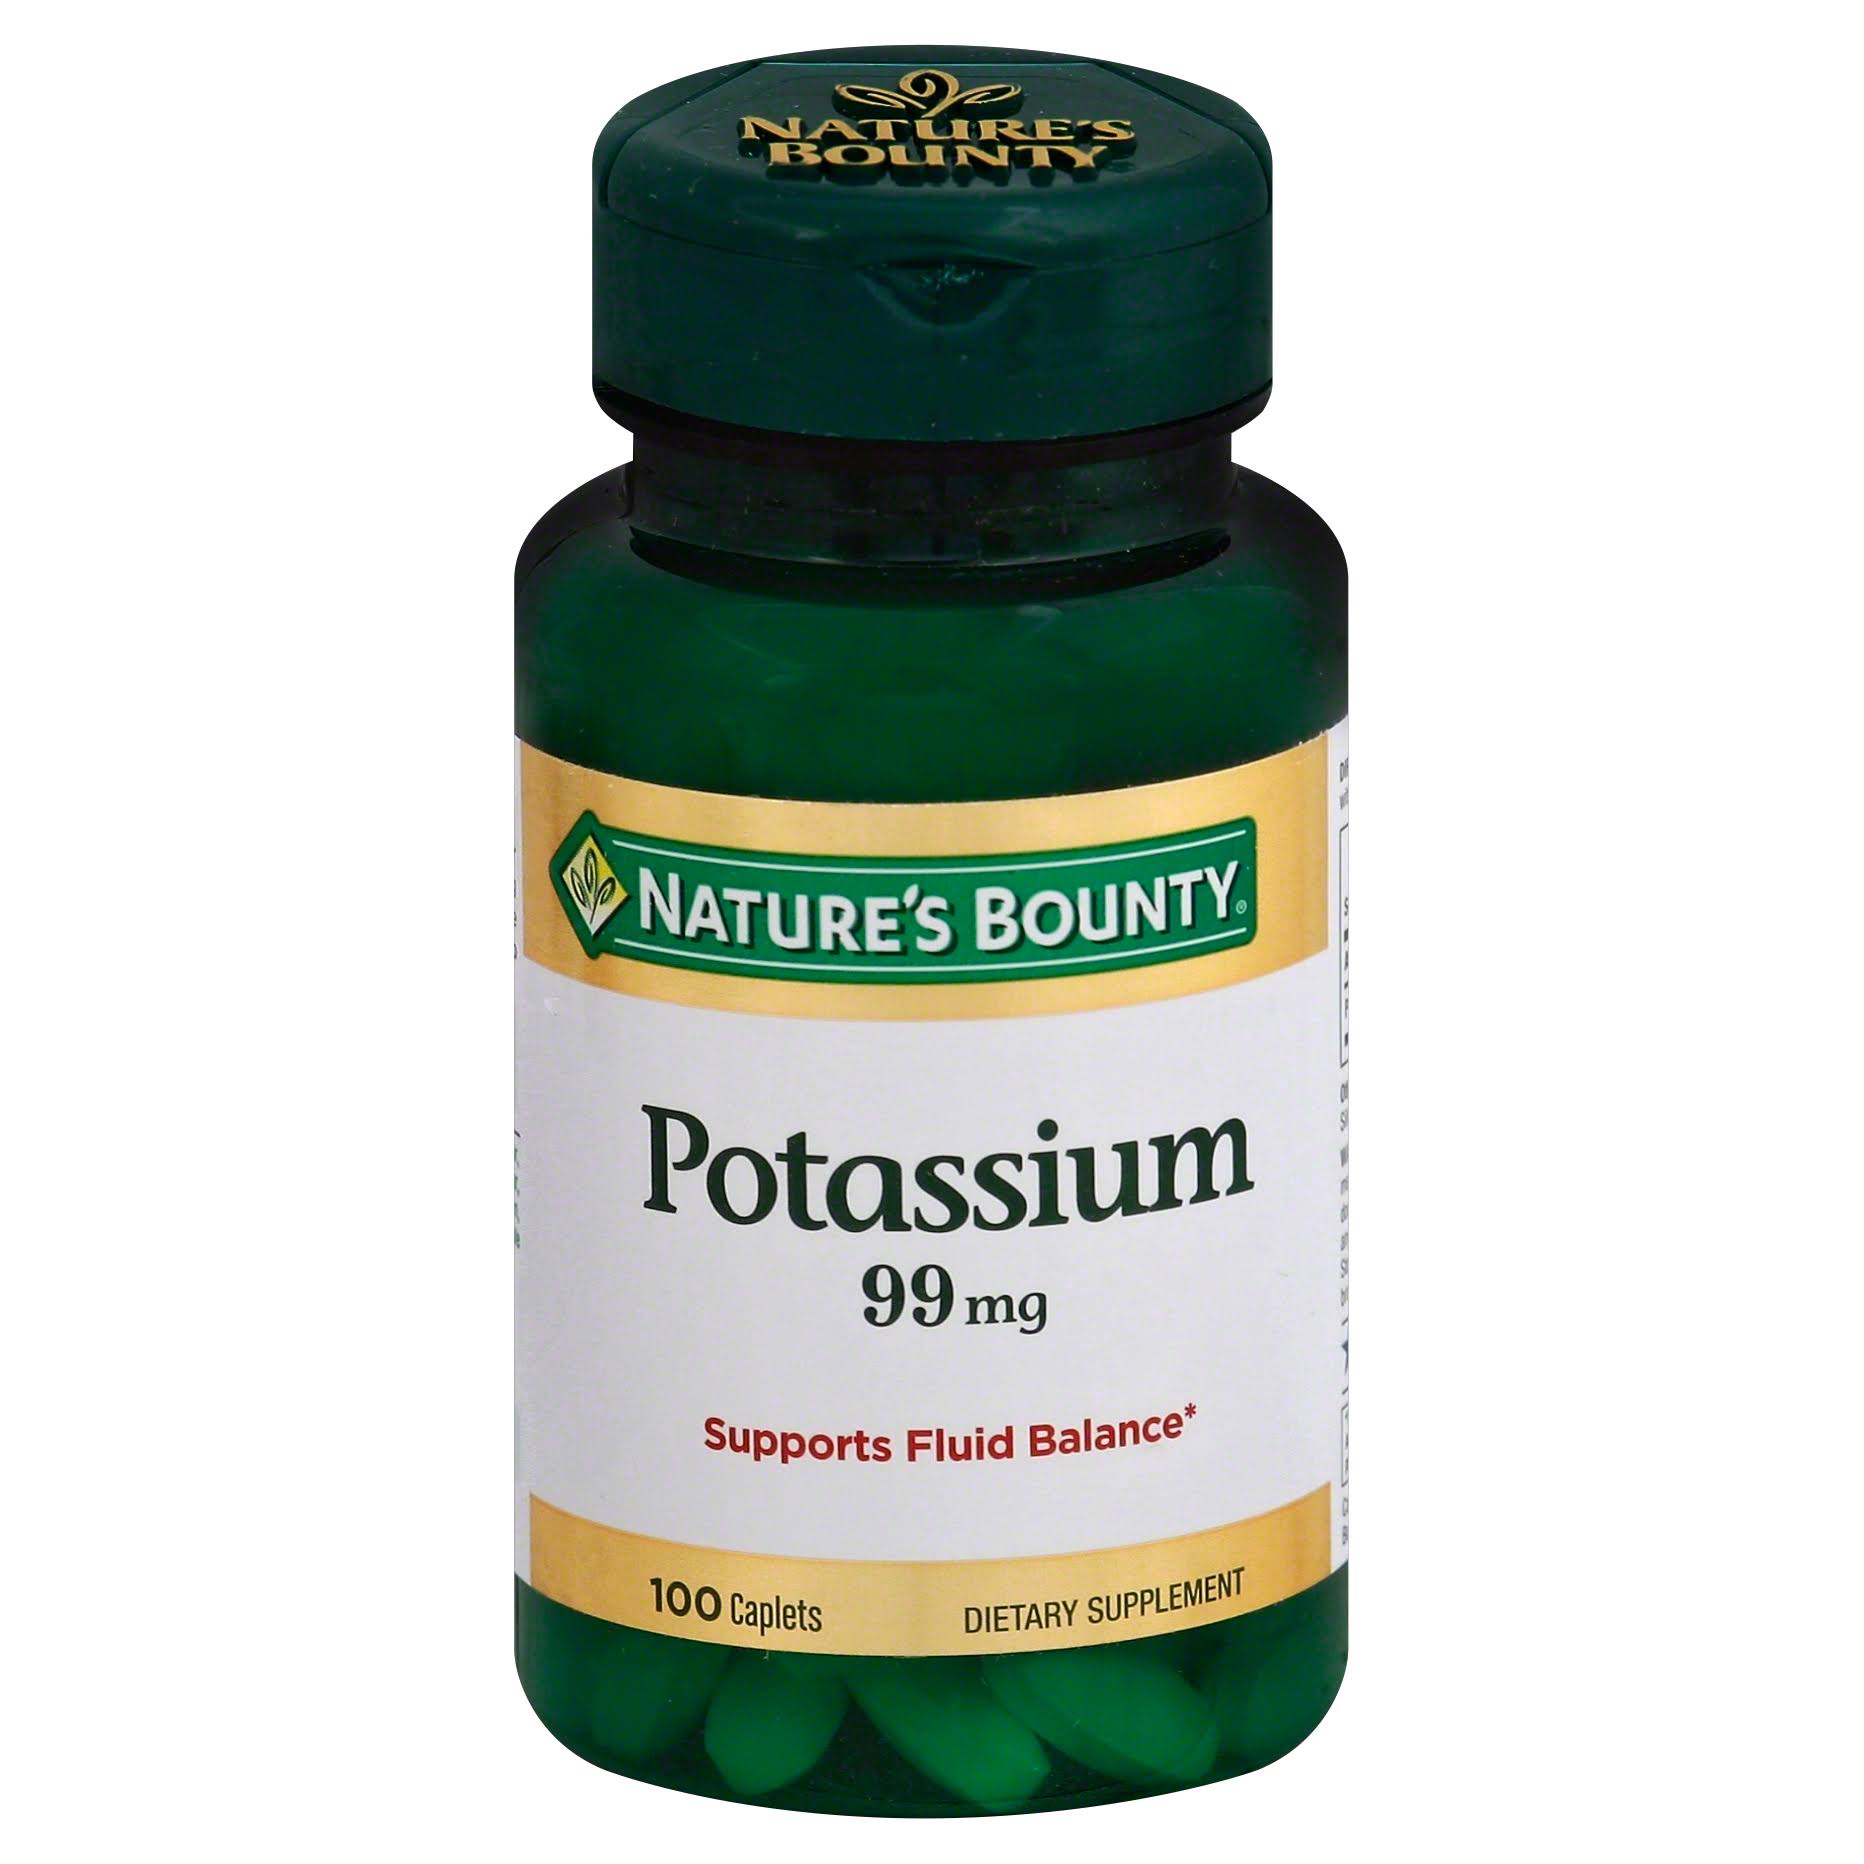 Nature's Bounty Potassium Gluconate Supplement - 300ct